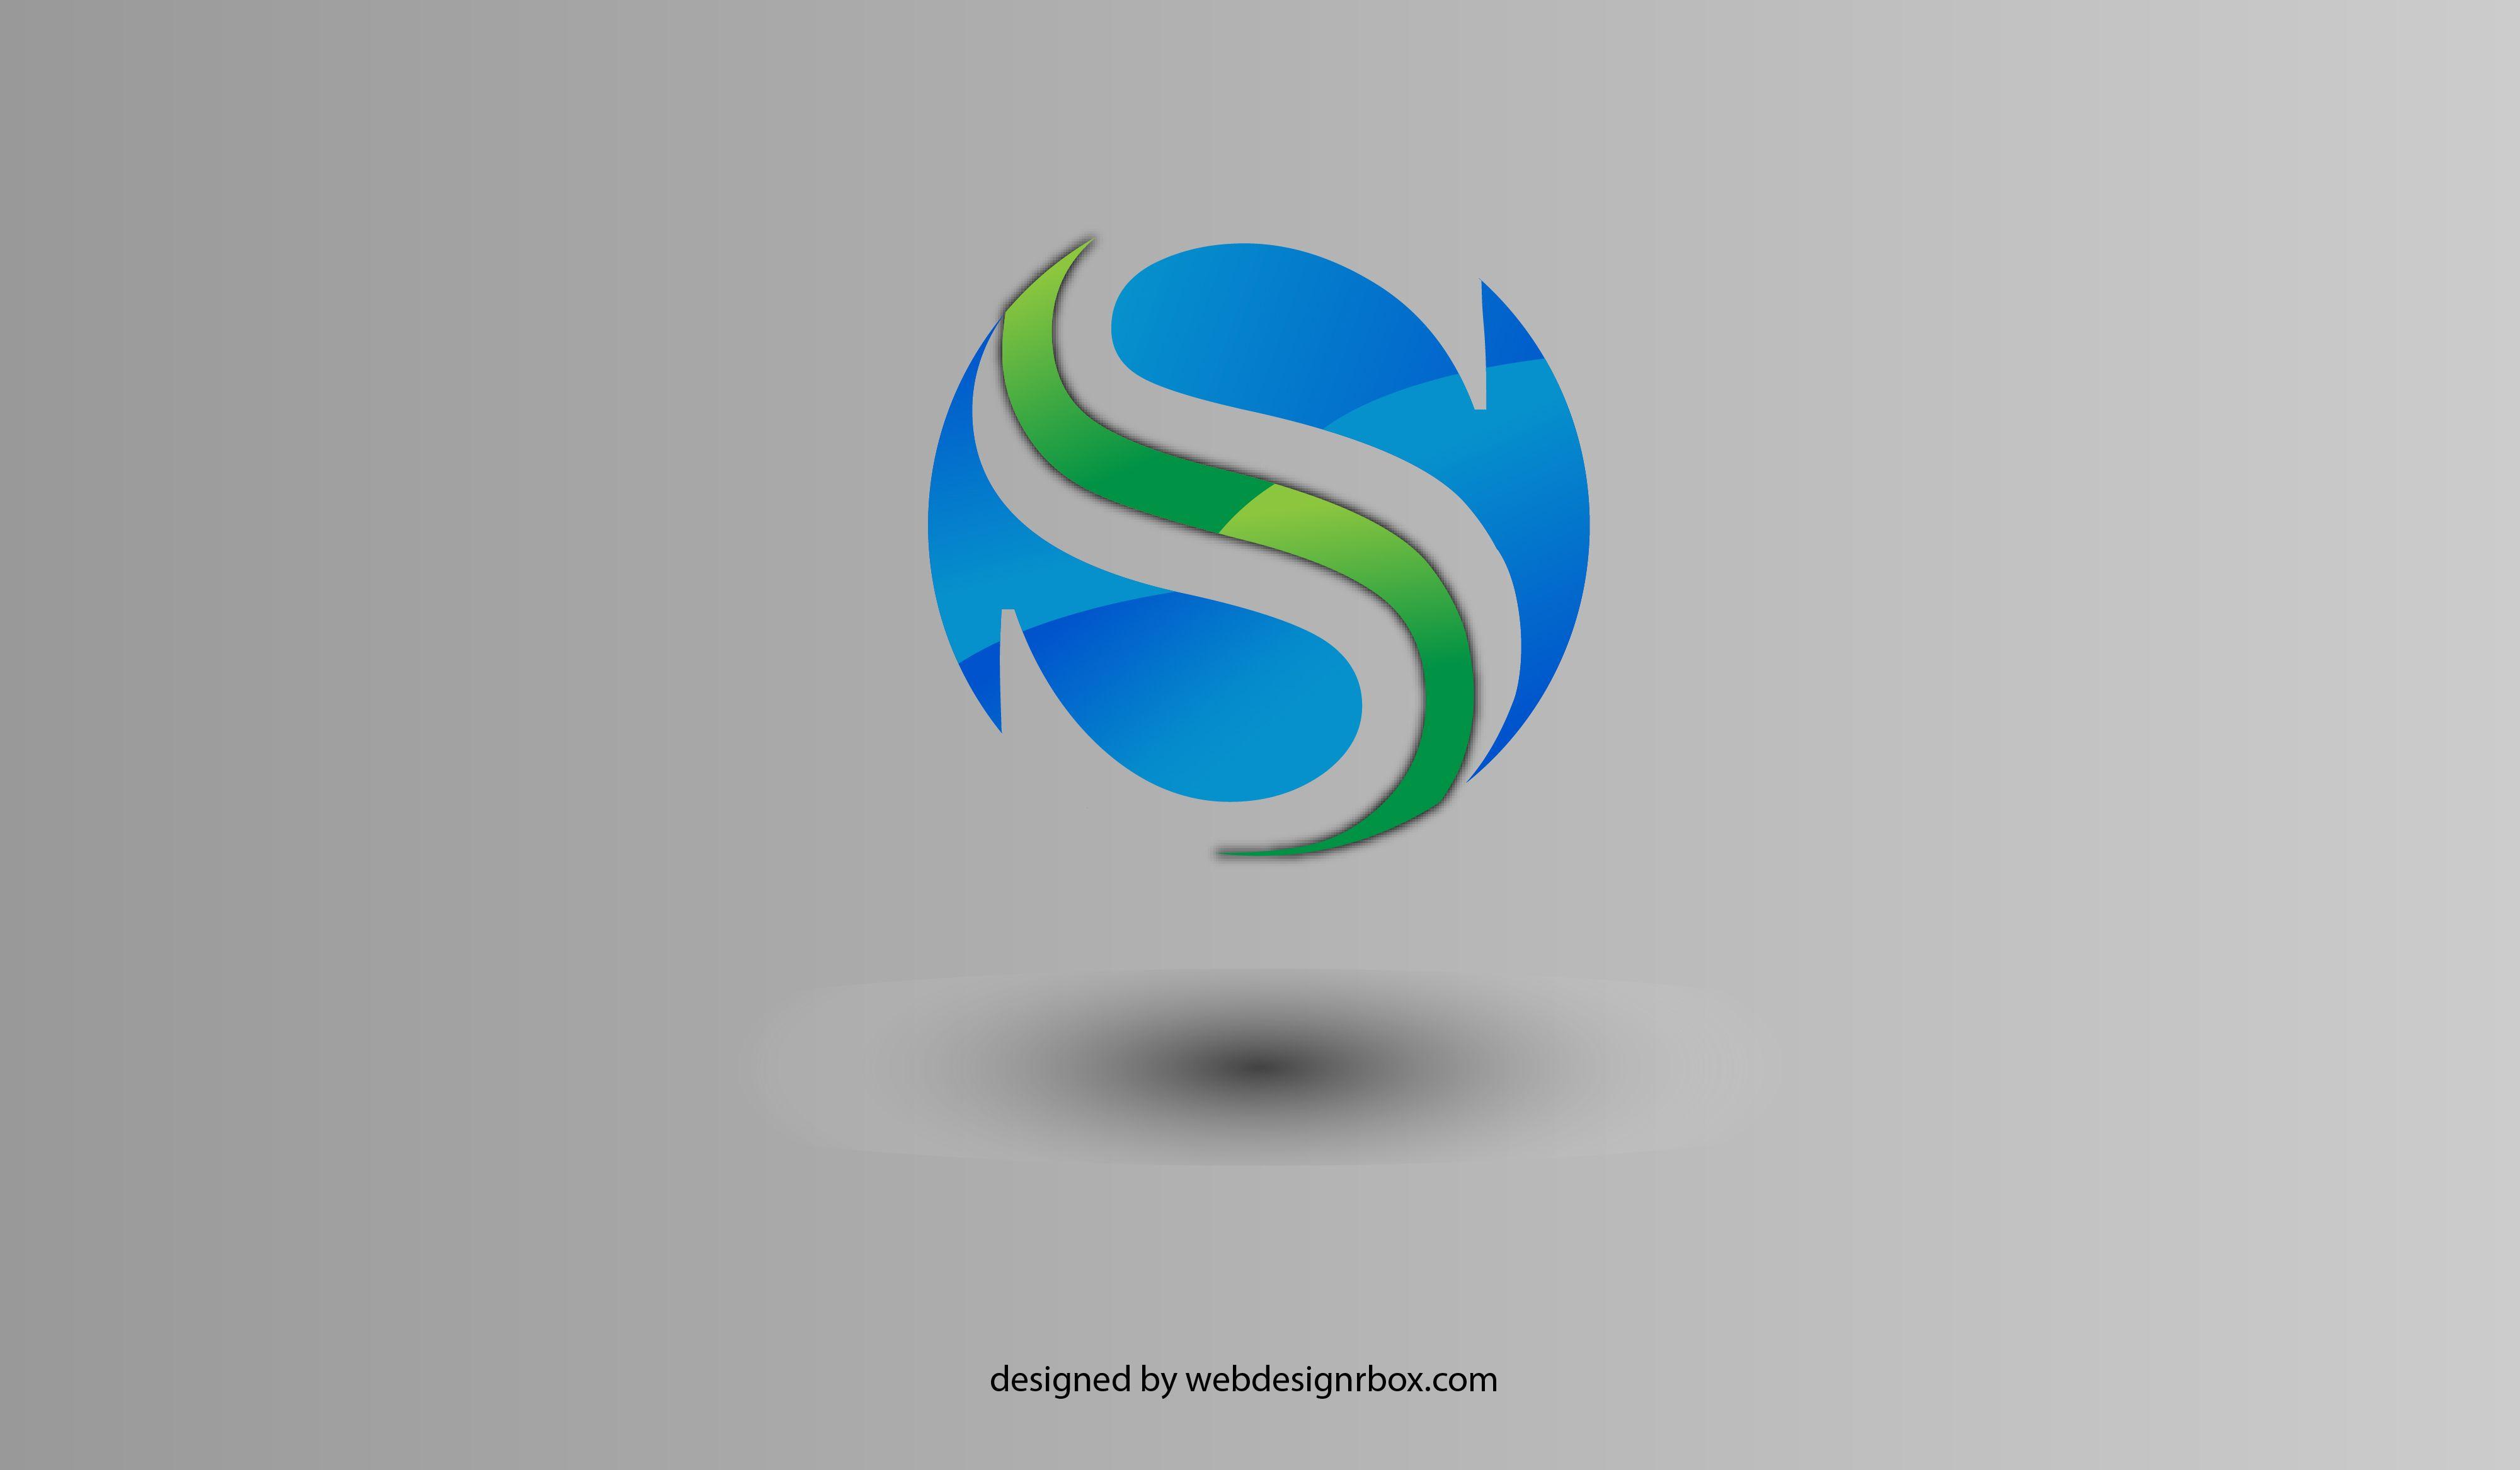 Creative Logo - S letter creative logo | LogoMoose - Logo Inspiration